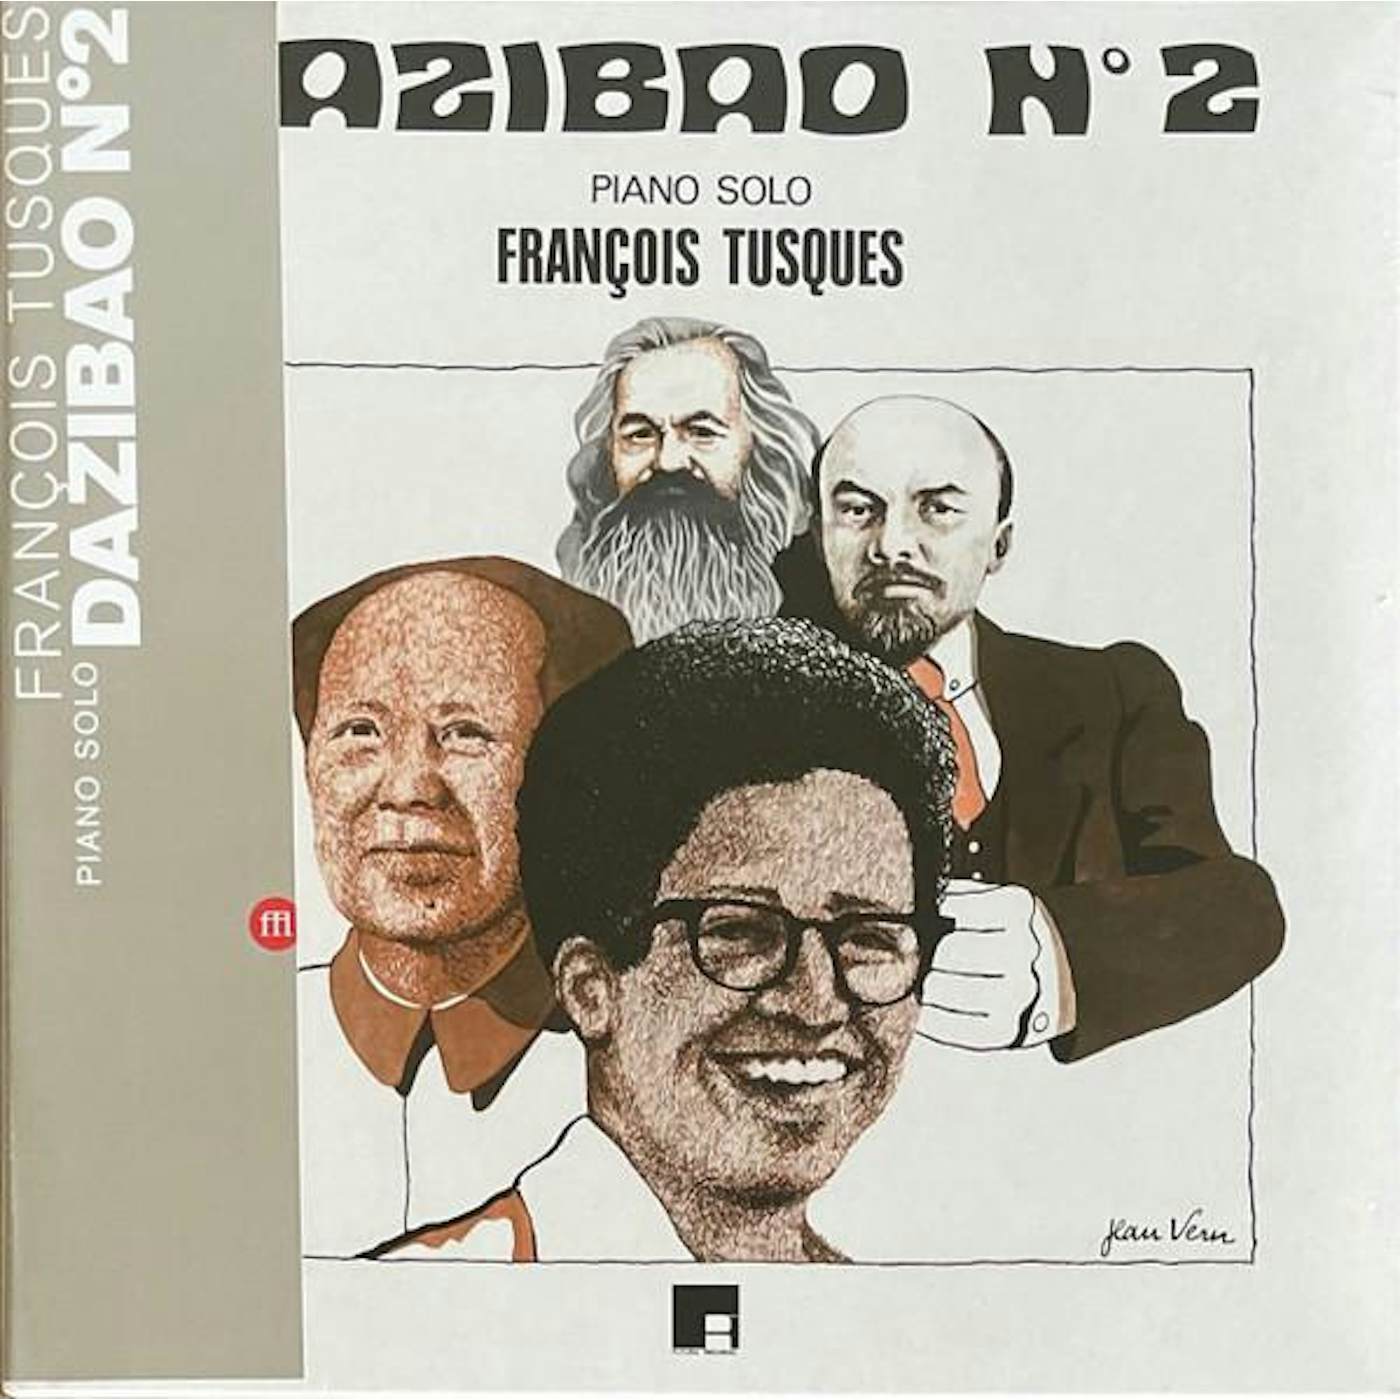 François Tusques Dazibao N2 Vinyl Record